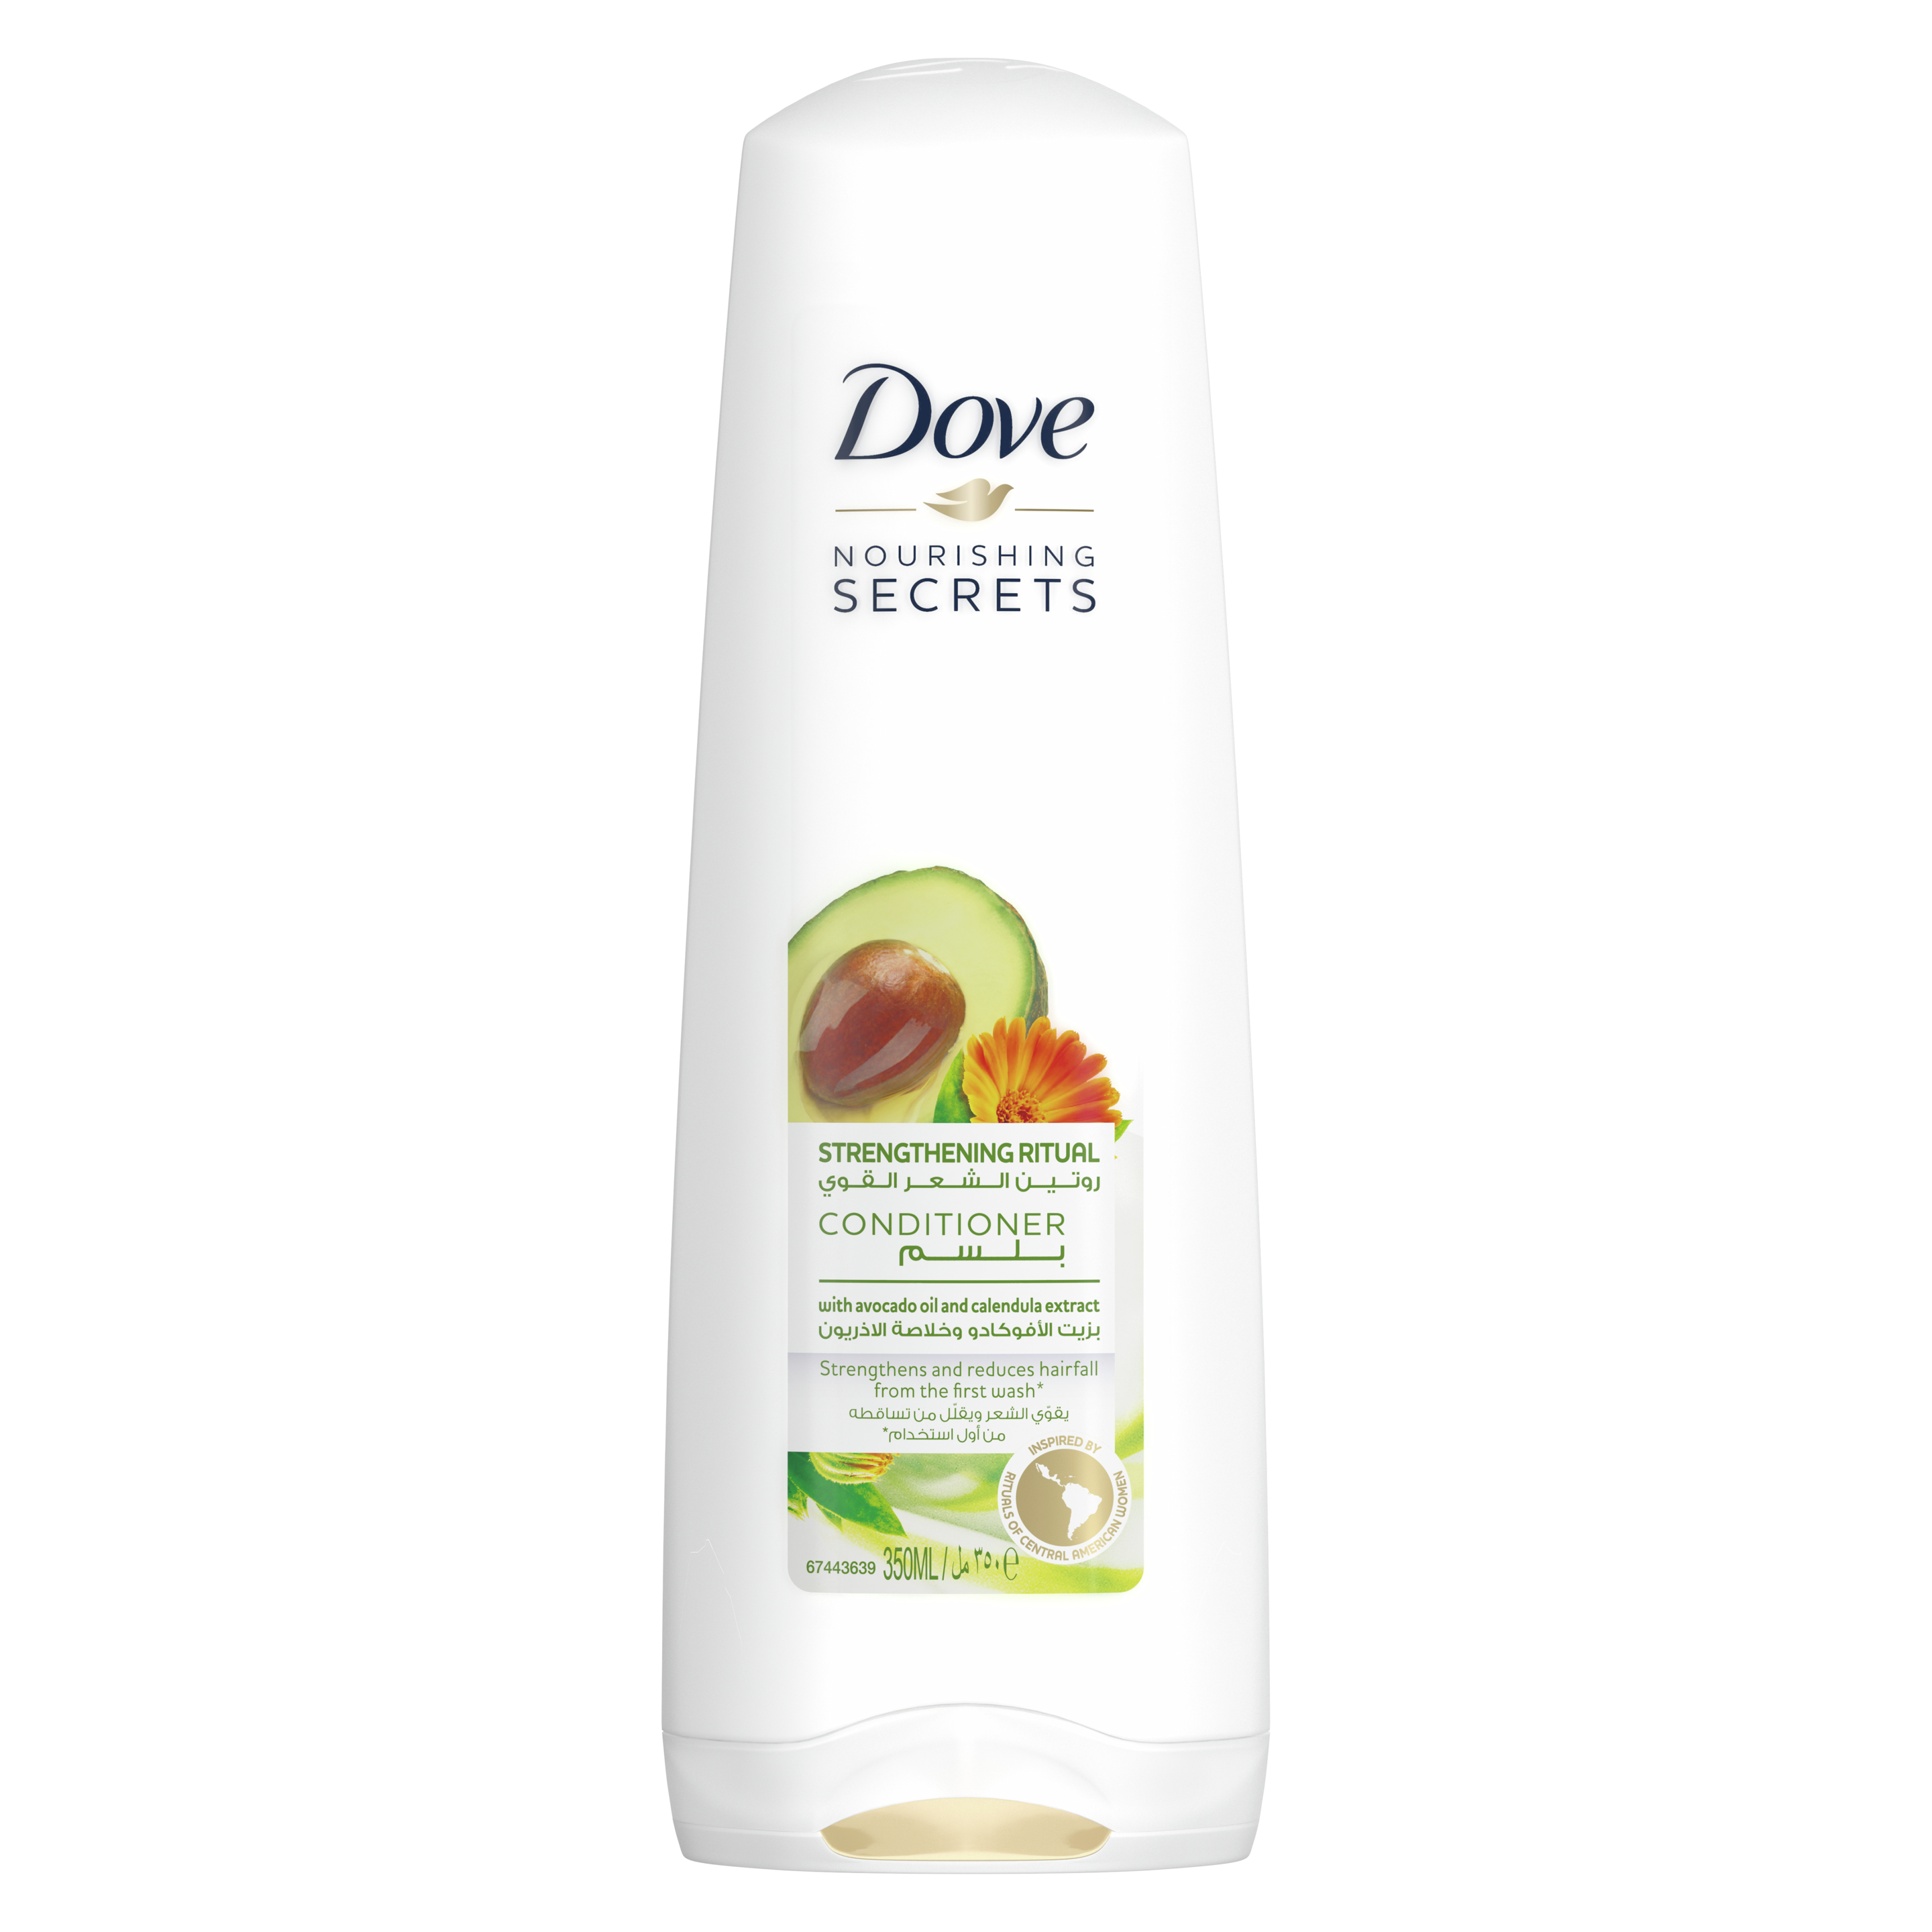 Dove Nourishing Secrets Conditioner Strengthening Ritual - Avocado Oil and Calendula Extract 350ml